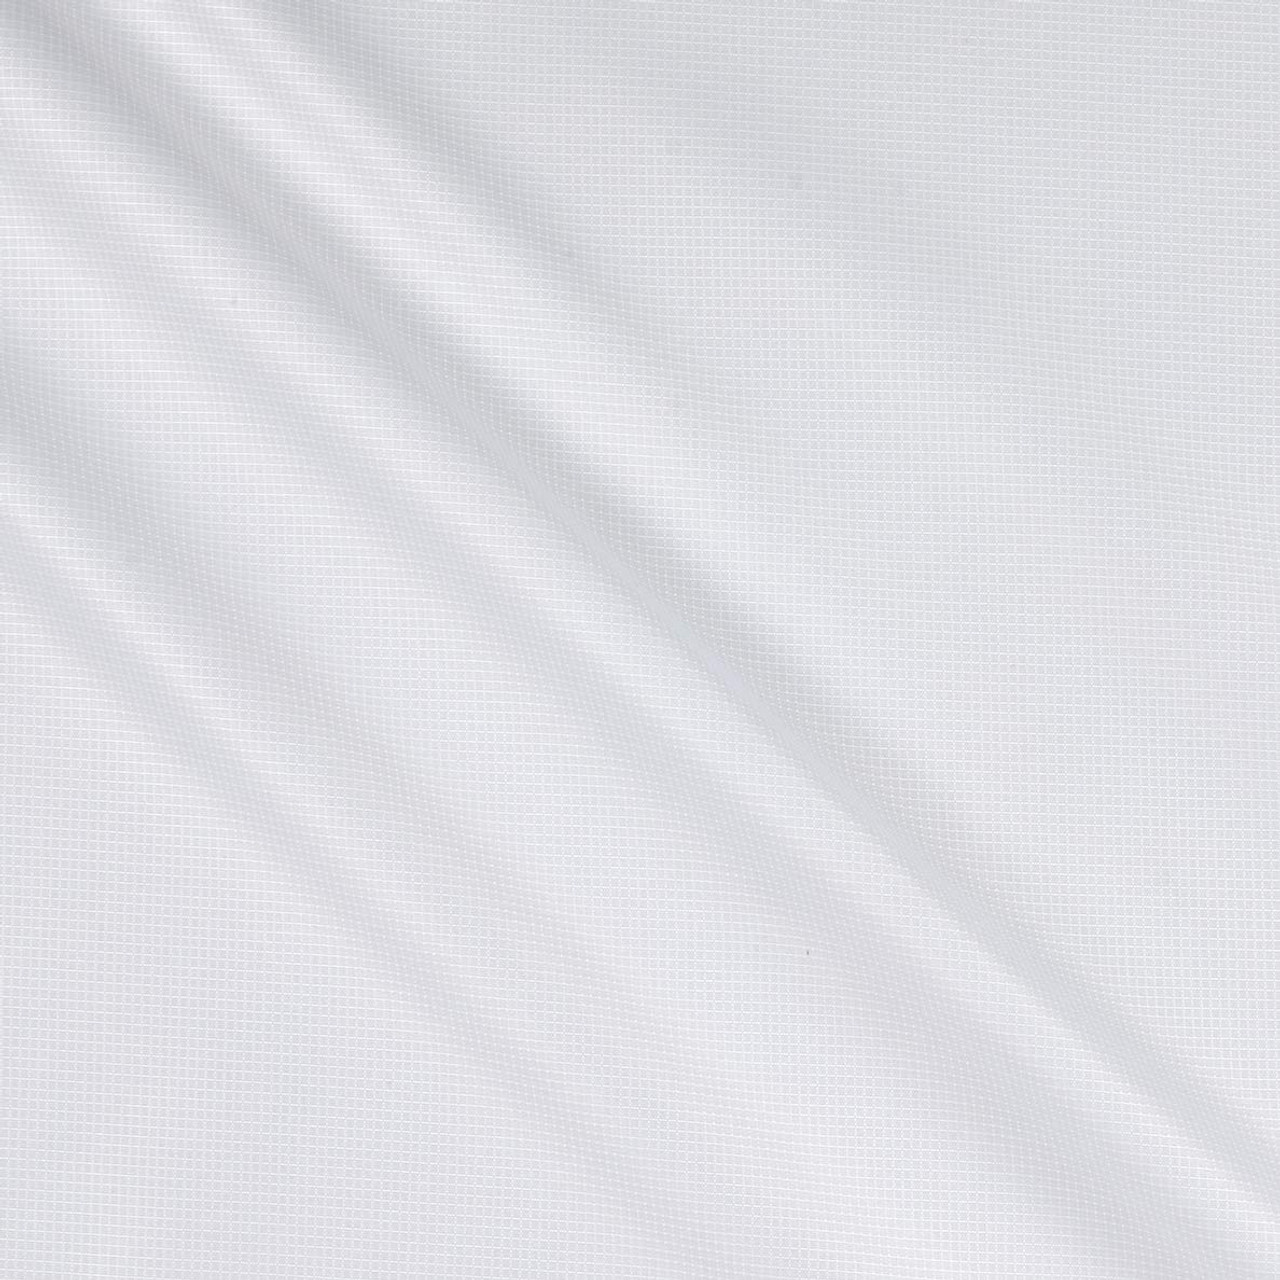 Explore White PUL Fabric 55” wide Polyurethane Laminated Knit